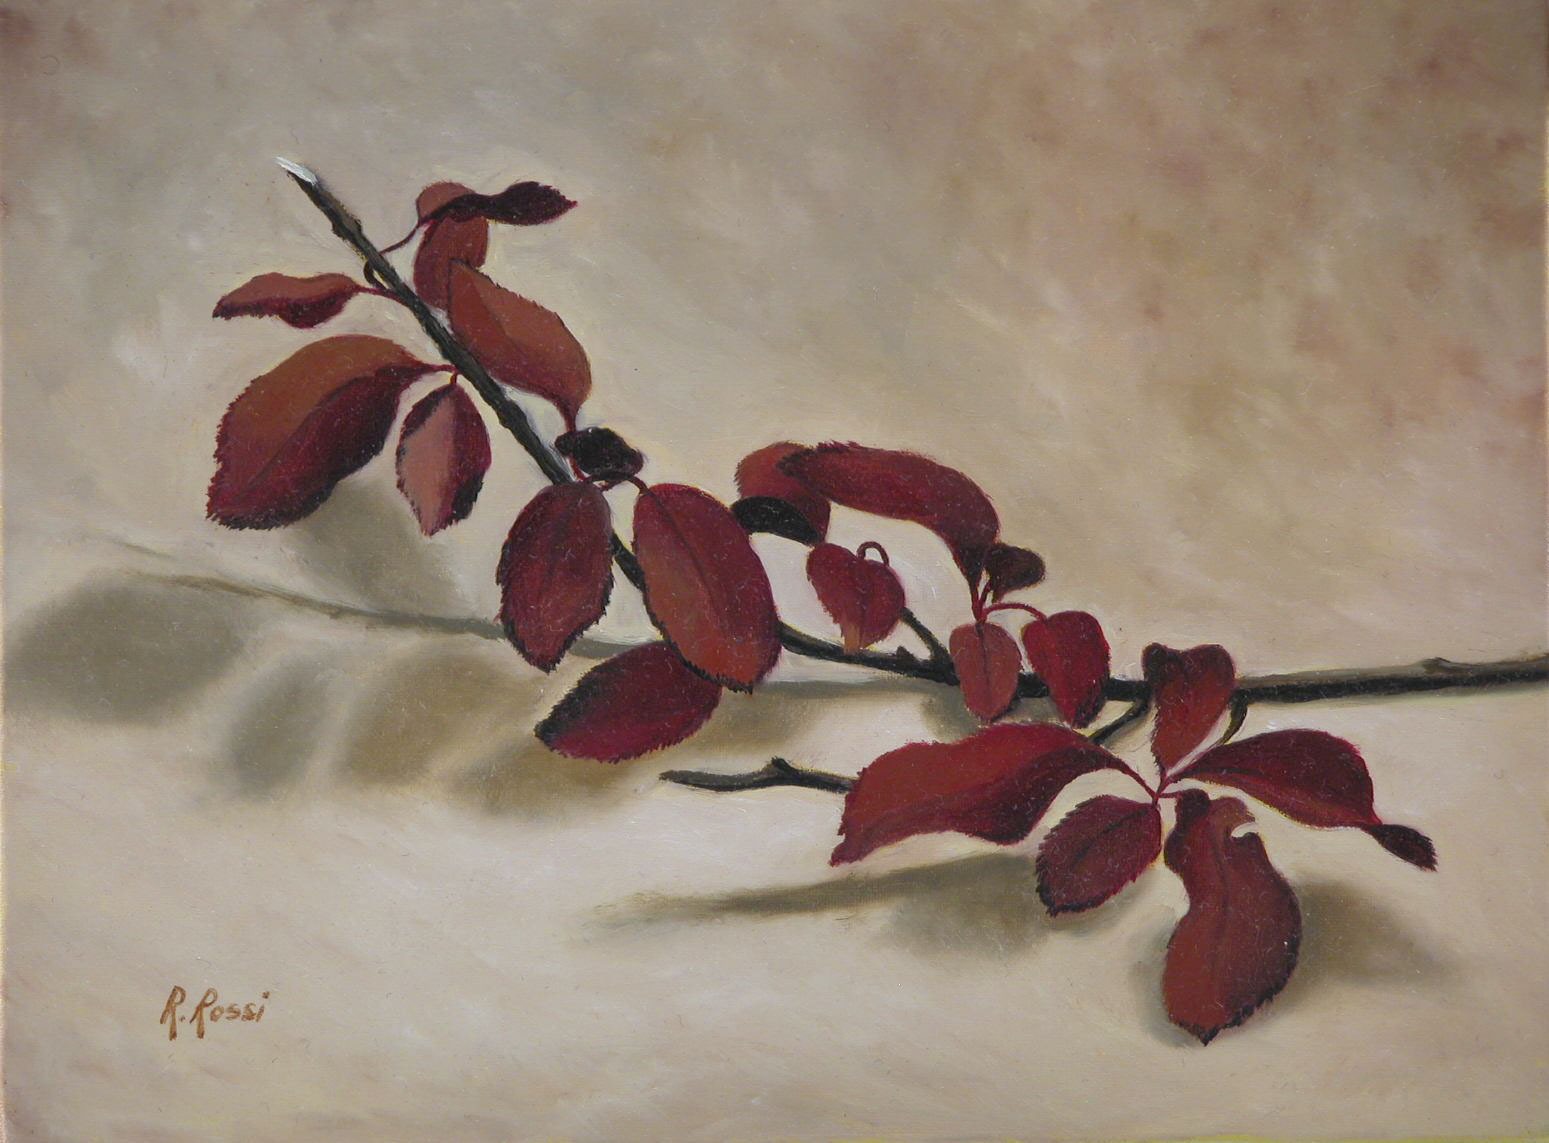 2008 roberta rossi – Rametto – olio su tela – 18 x 24